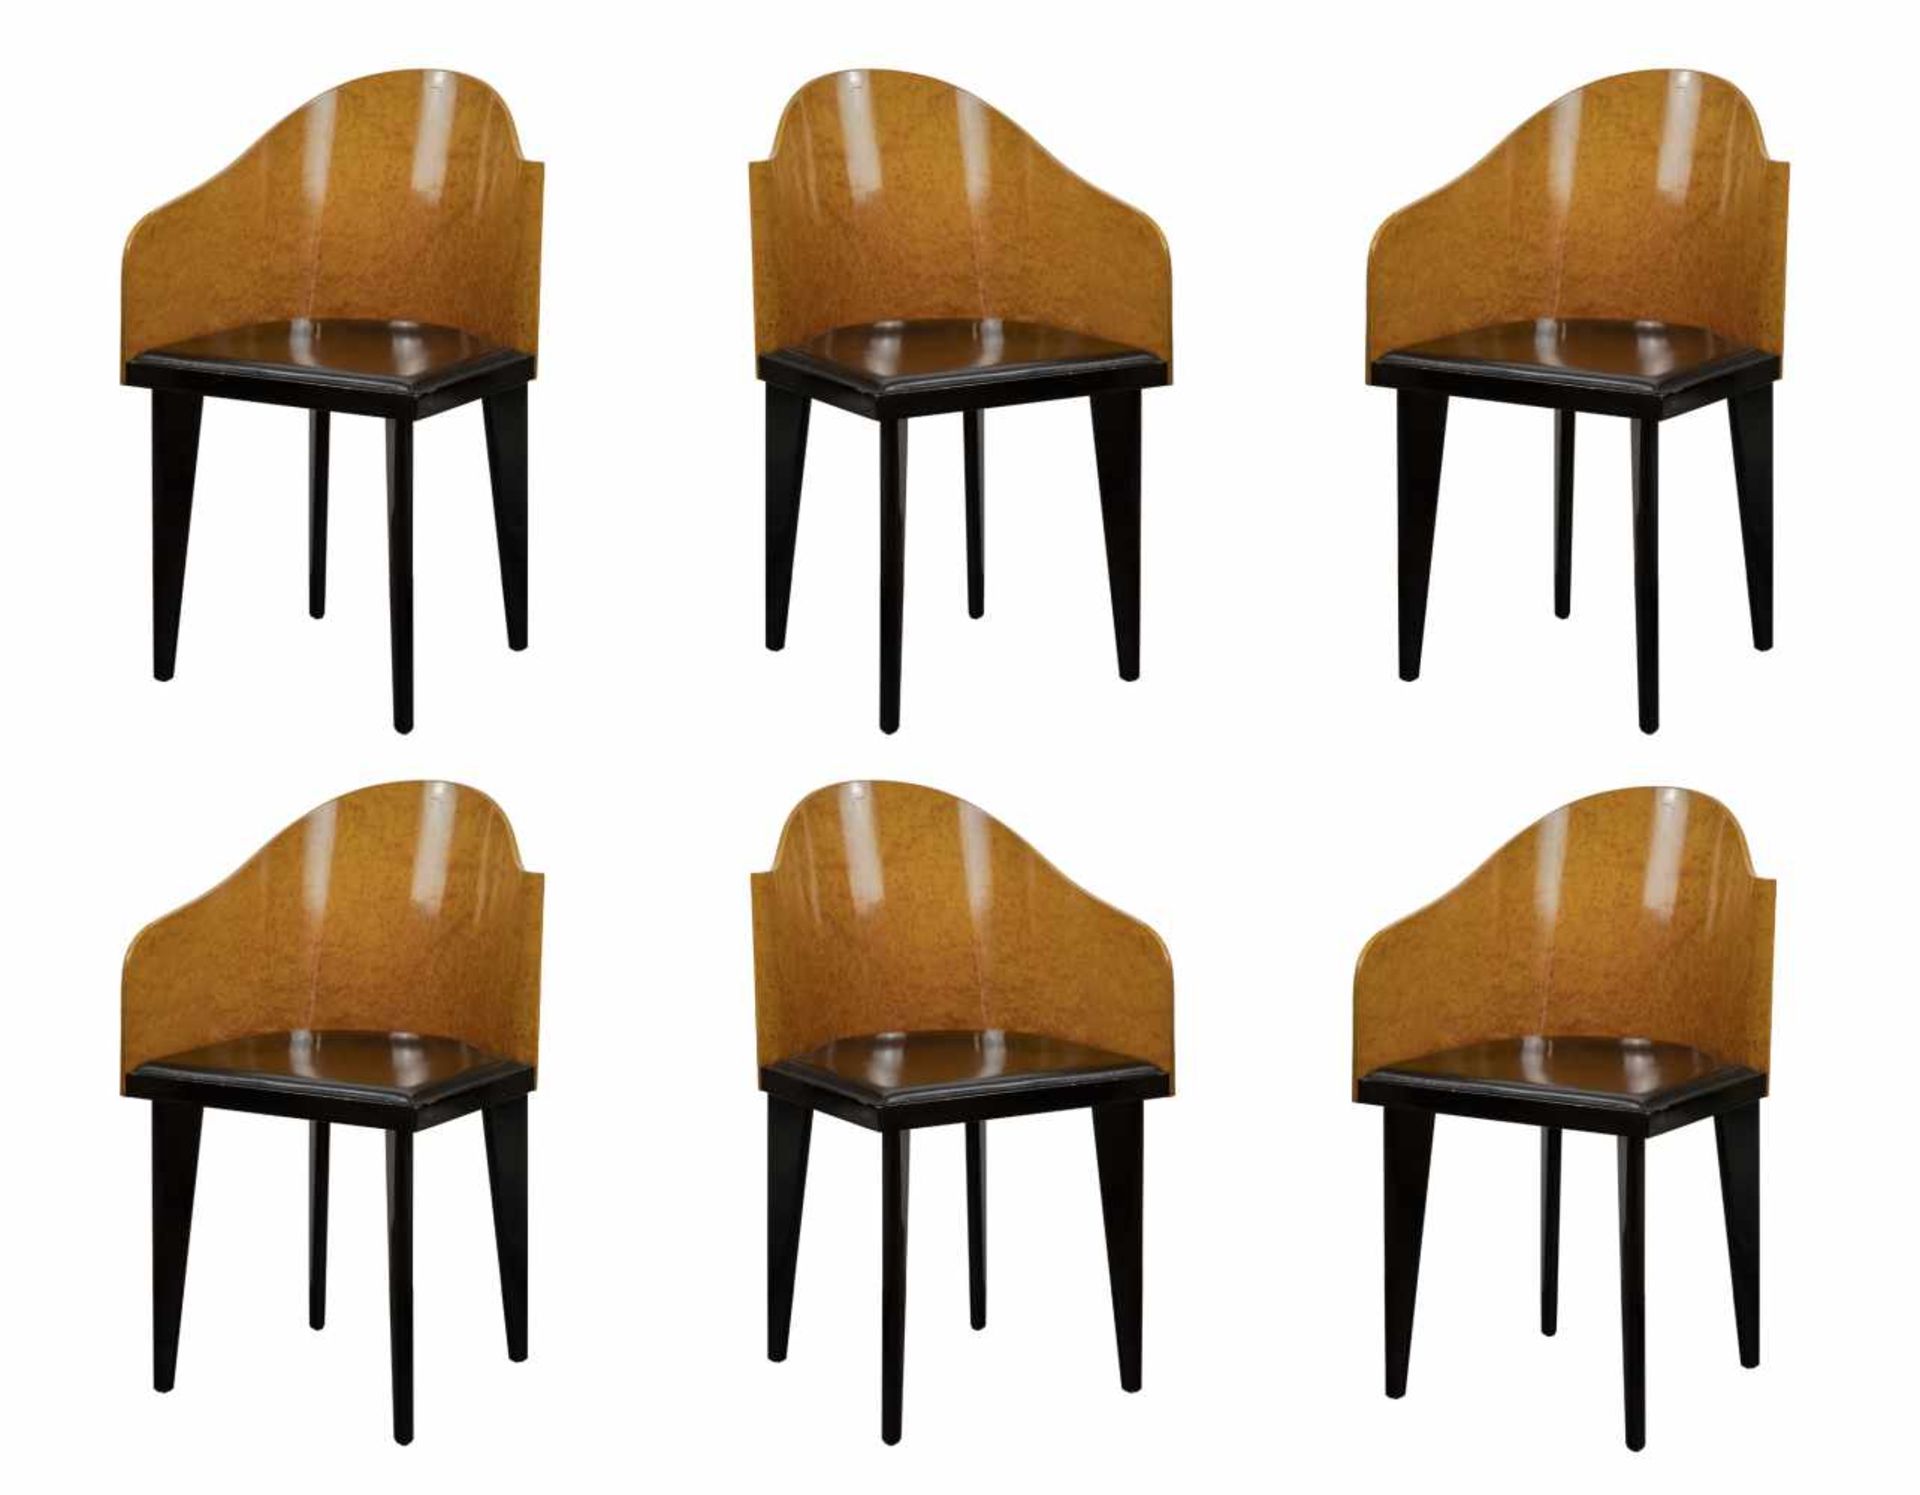 PIERO SARTOGO pour SAPORITI ITALIASuite de 6 chaises vintage model " Toscana "De forme asym